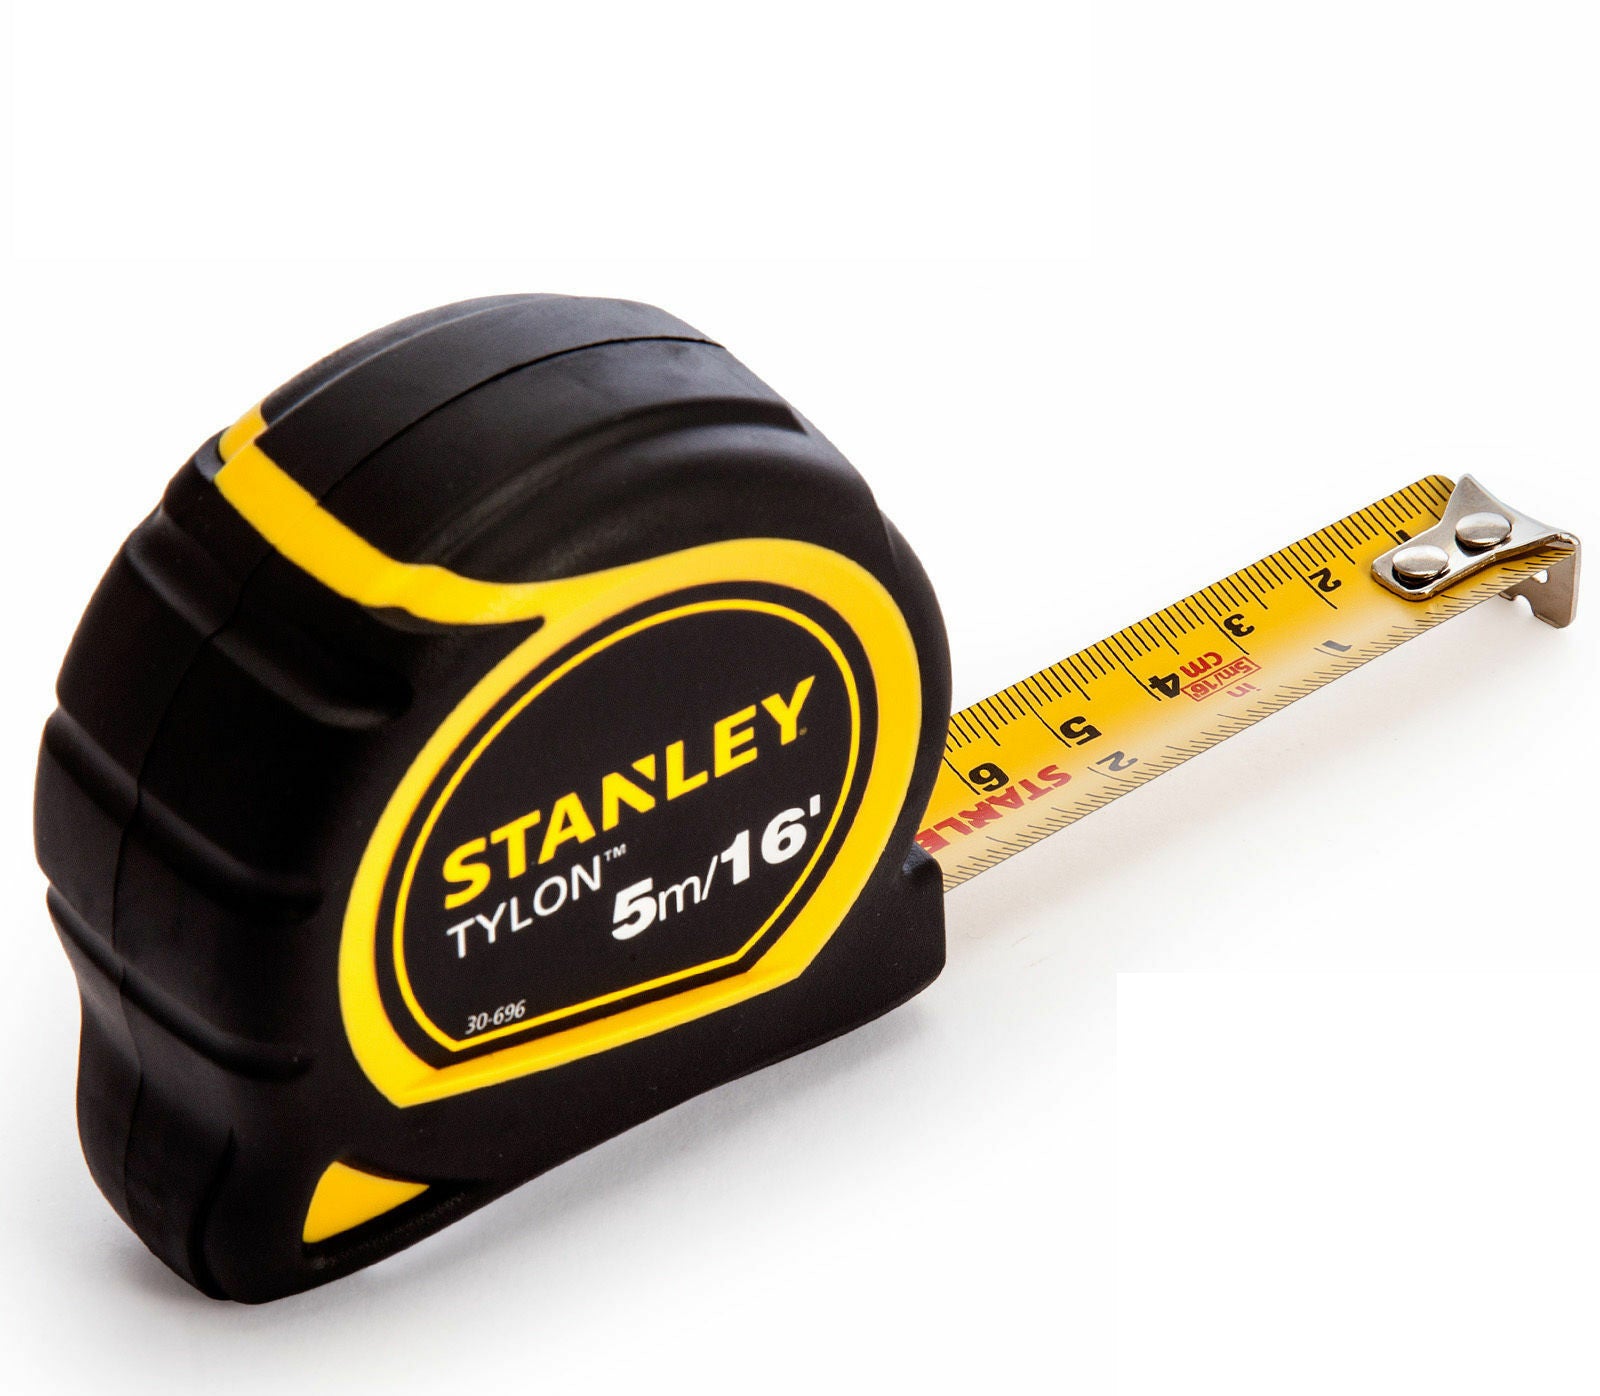 Stanley STA130696N Nylon Pocket Tape 5m/16ft Loose 1-30-696 Pack of 5